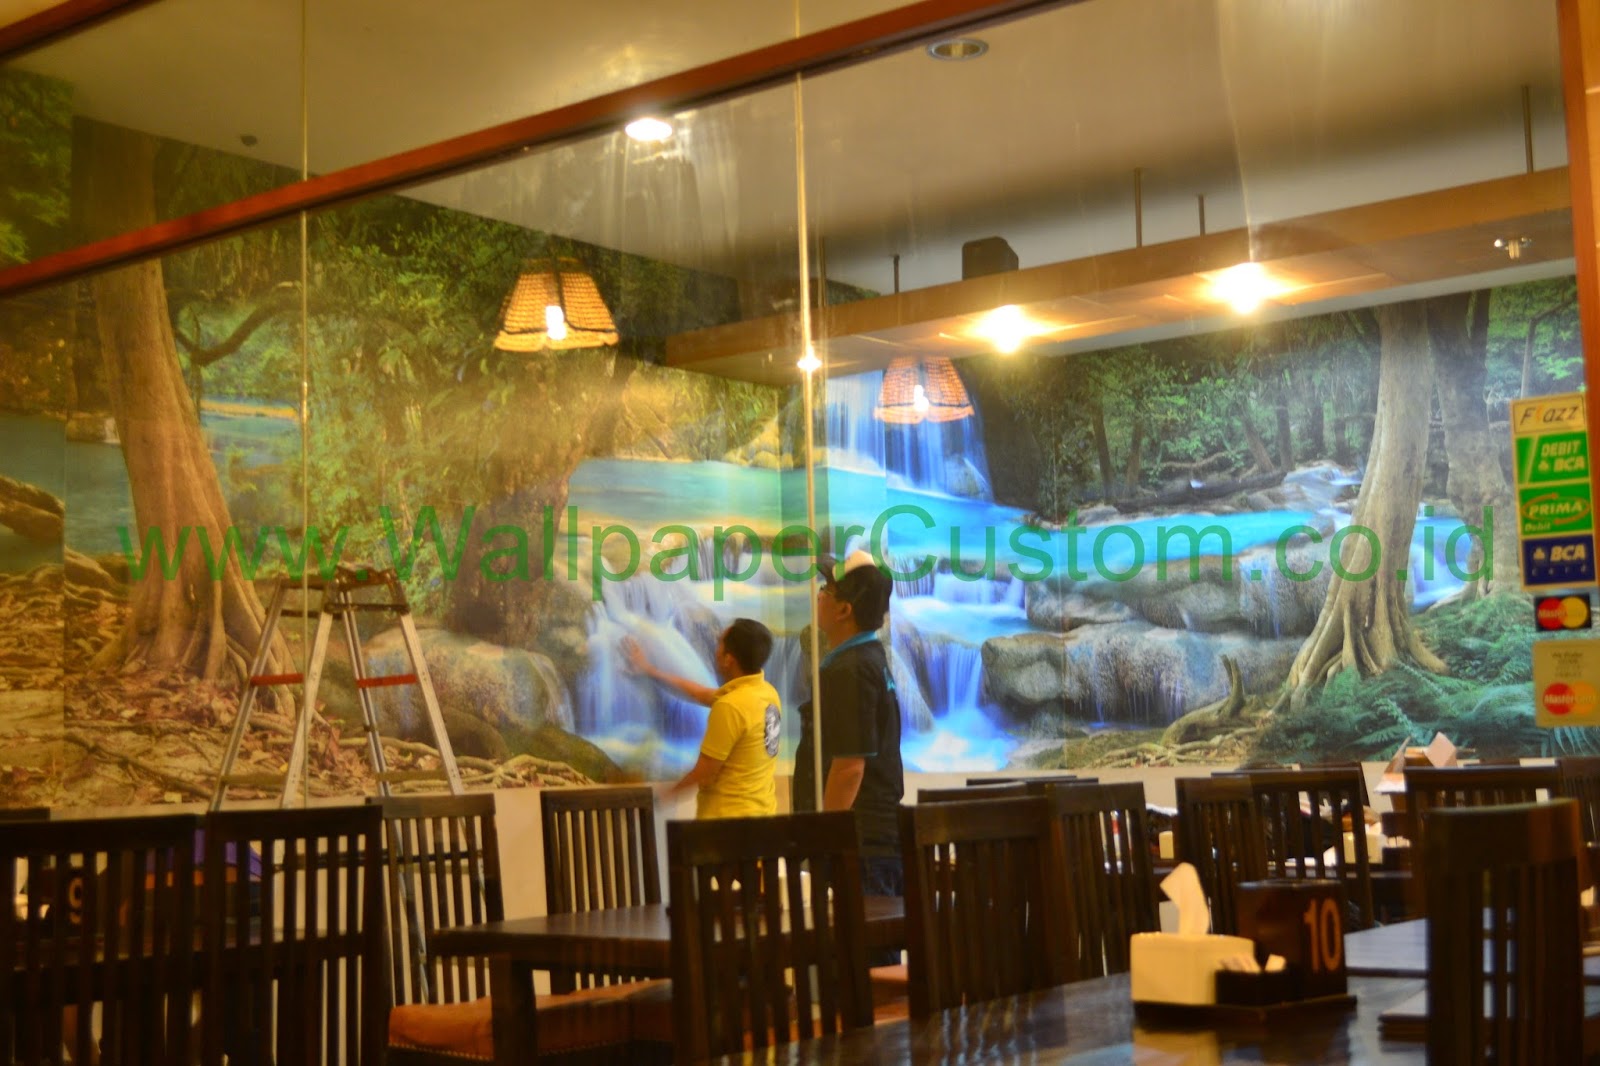 Jual Wallpaper Dinding 3d Pemandangan Alam Jakarta Keungulan Custom Gambar